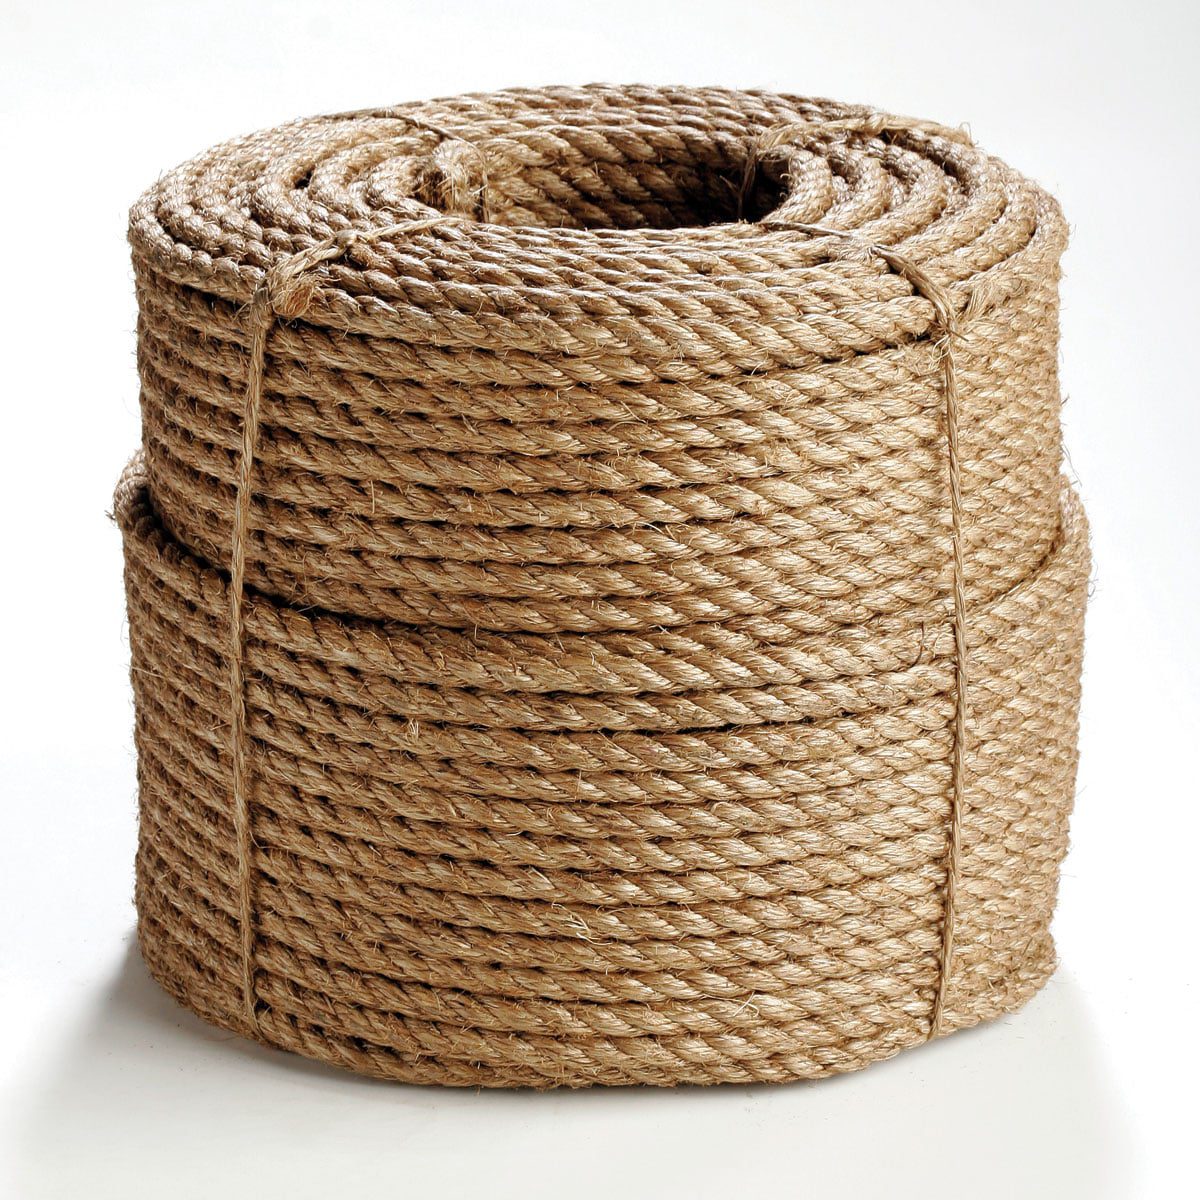 rope fiber